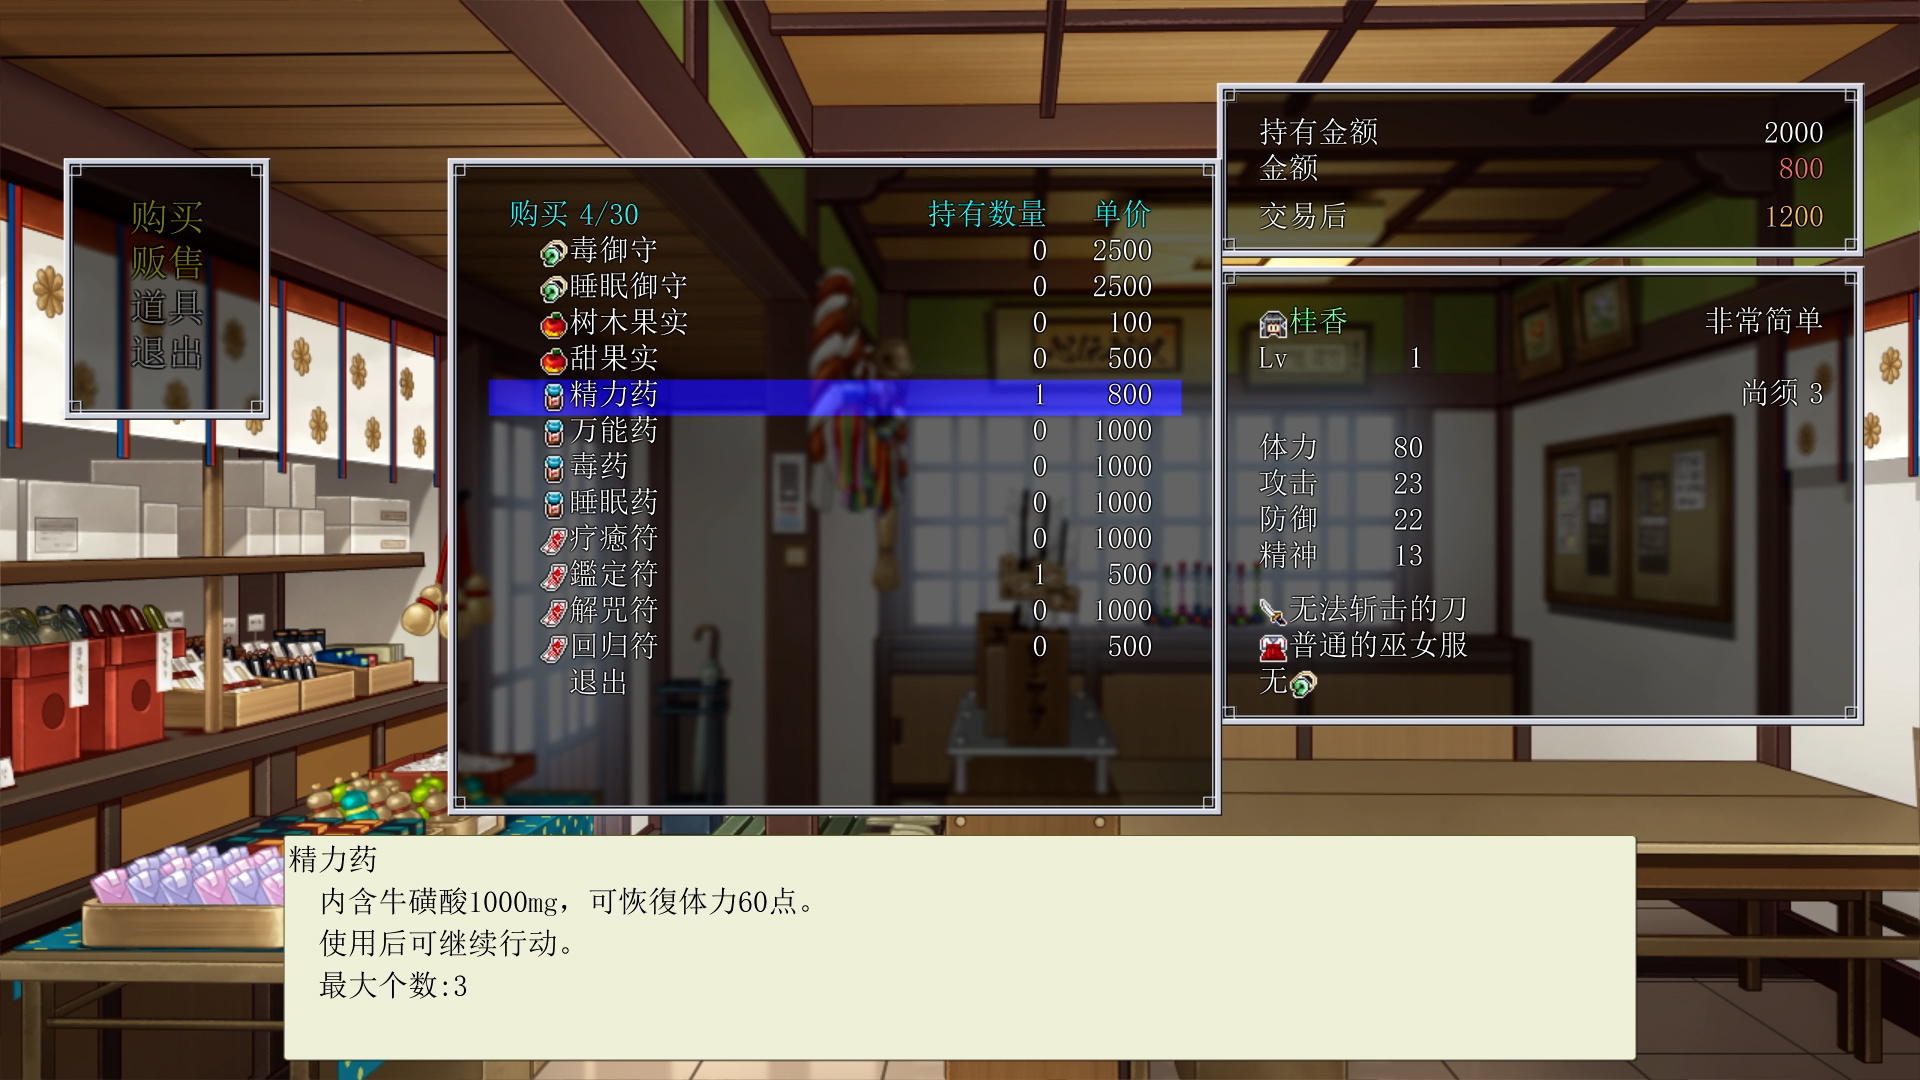 Dawn of Kagura: Keika's Story (Simplified Chinese) - Simulation - 3 - Select